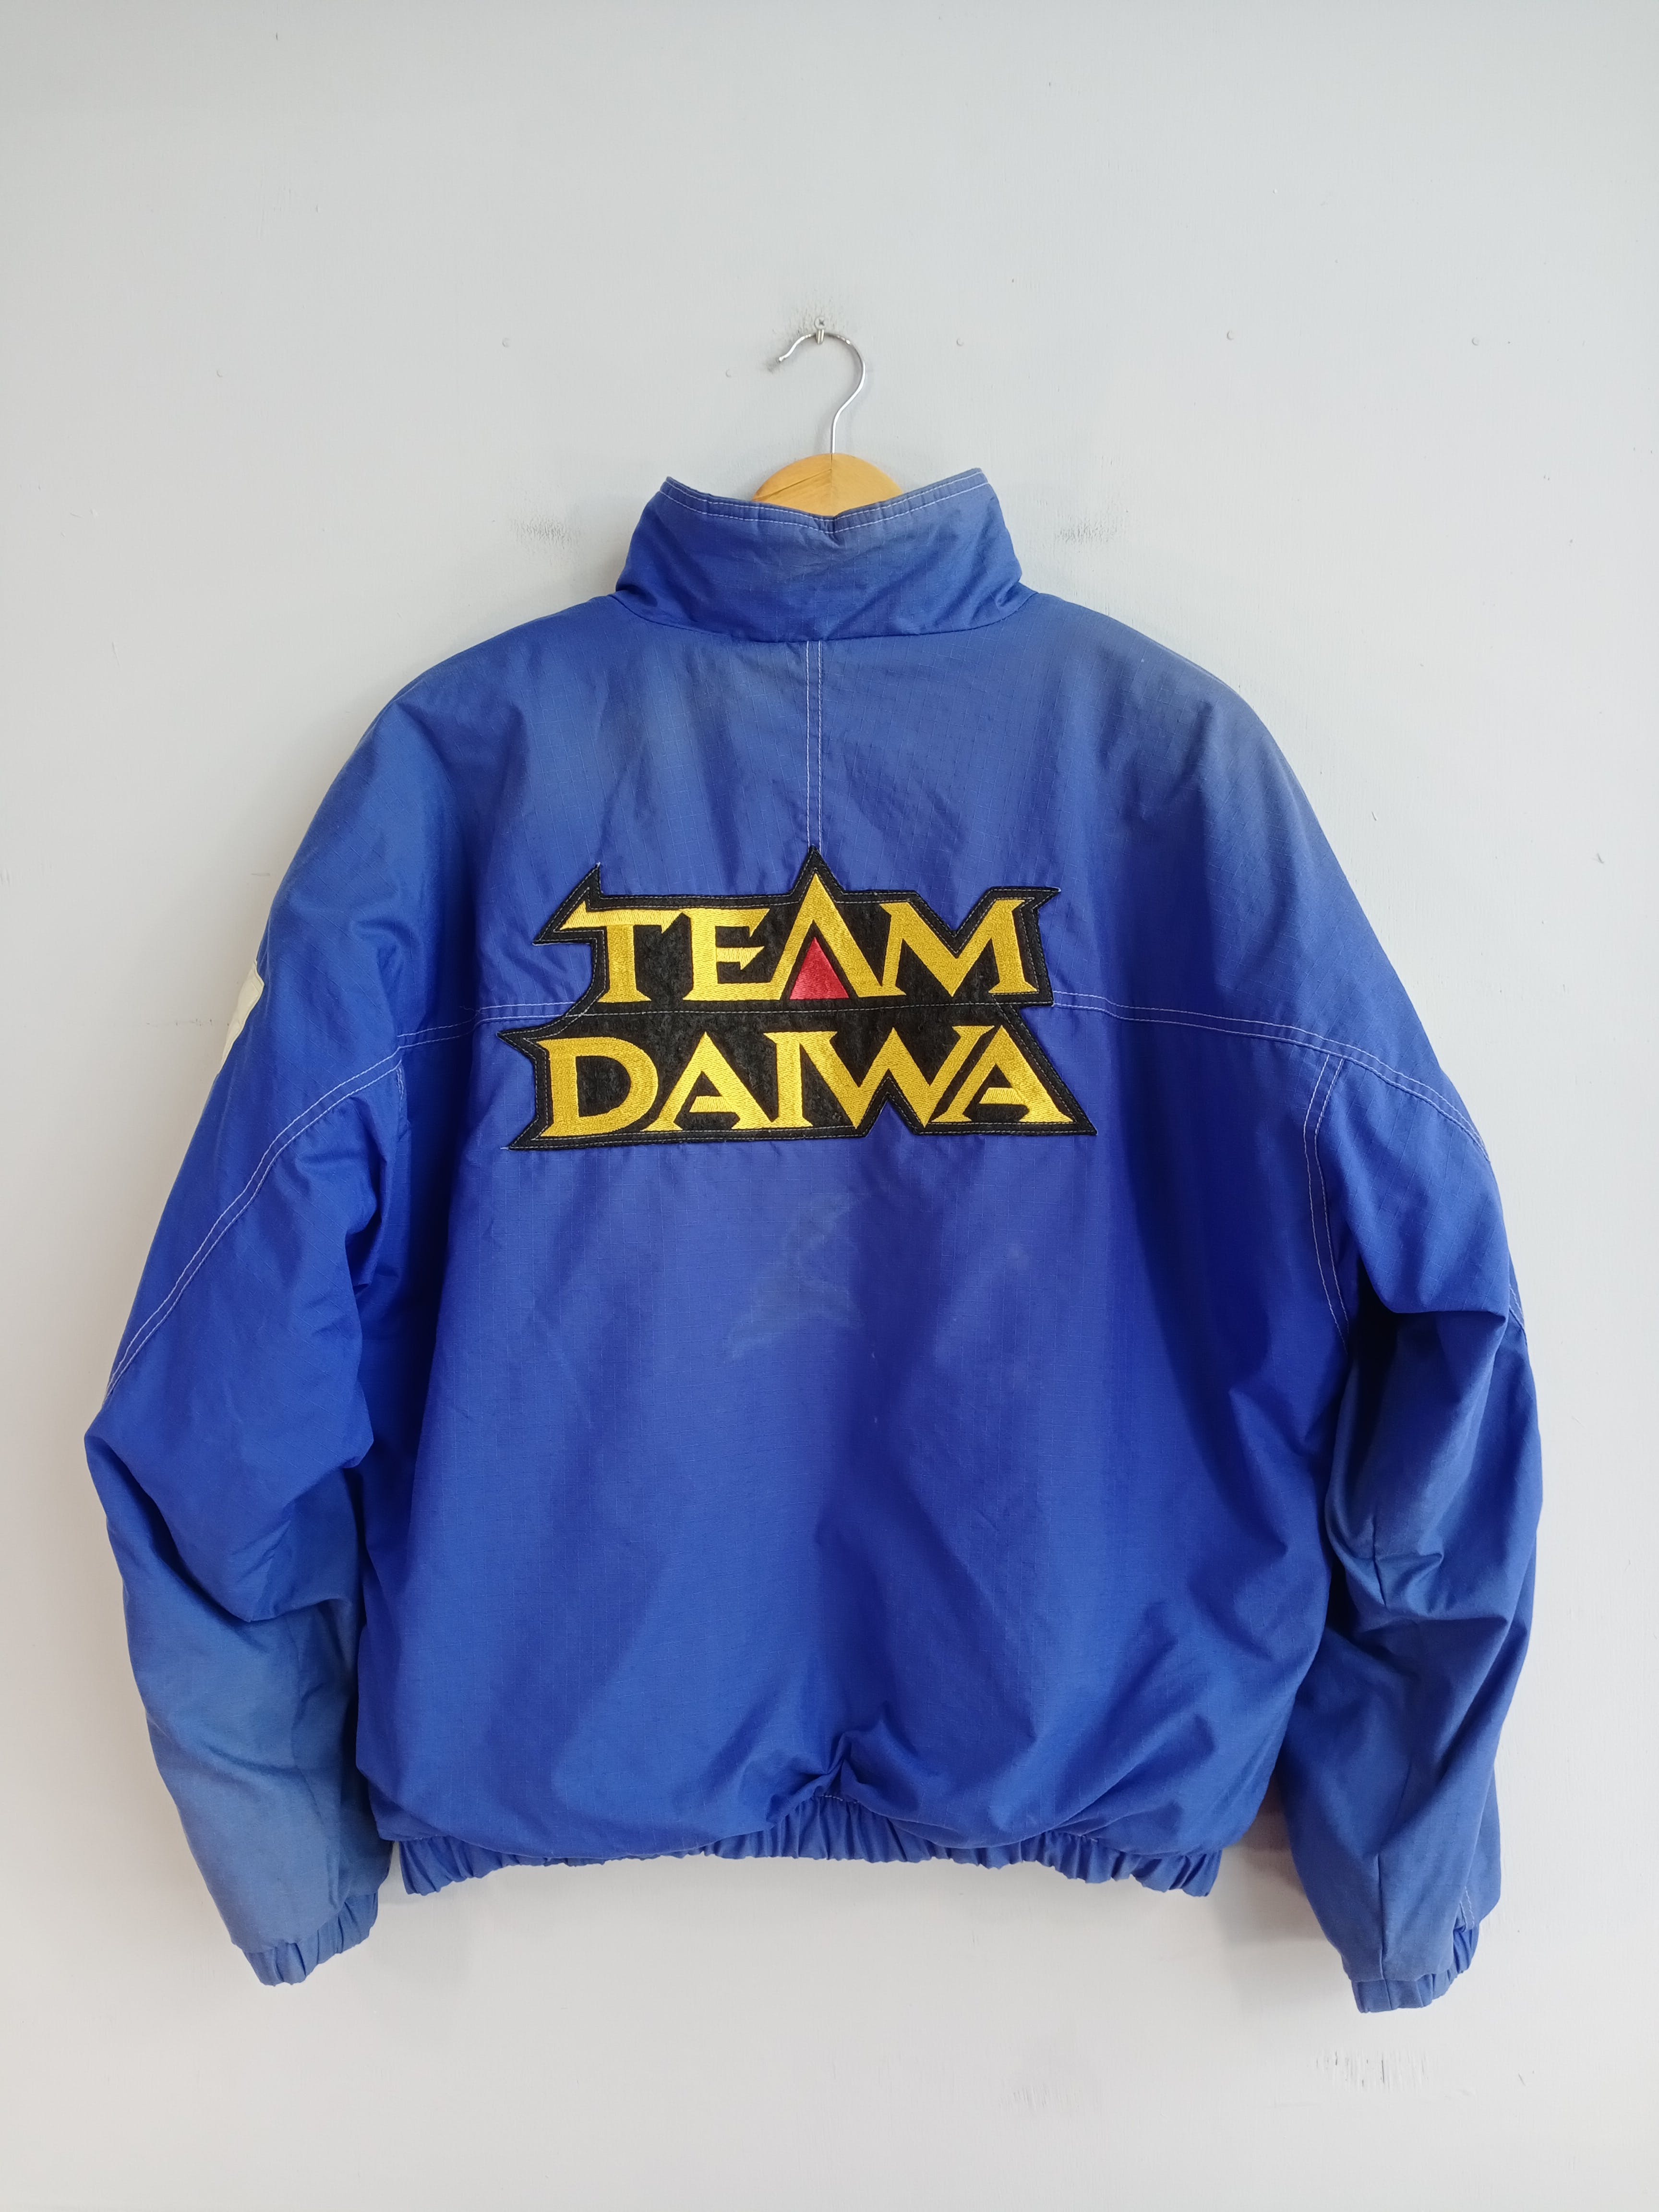 💥RARE💥Vintage 90s Team Daiwa Fishing Bomber Jacket - 1